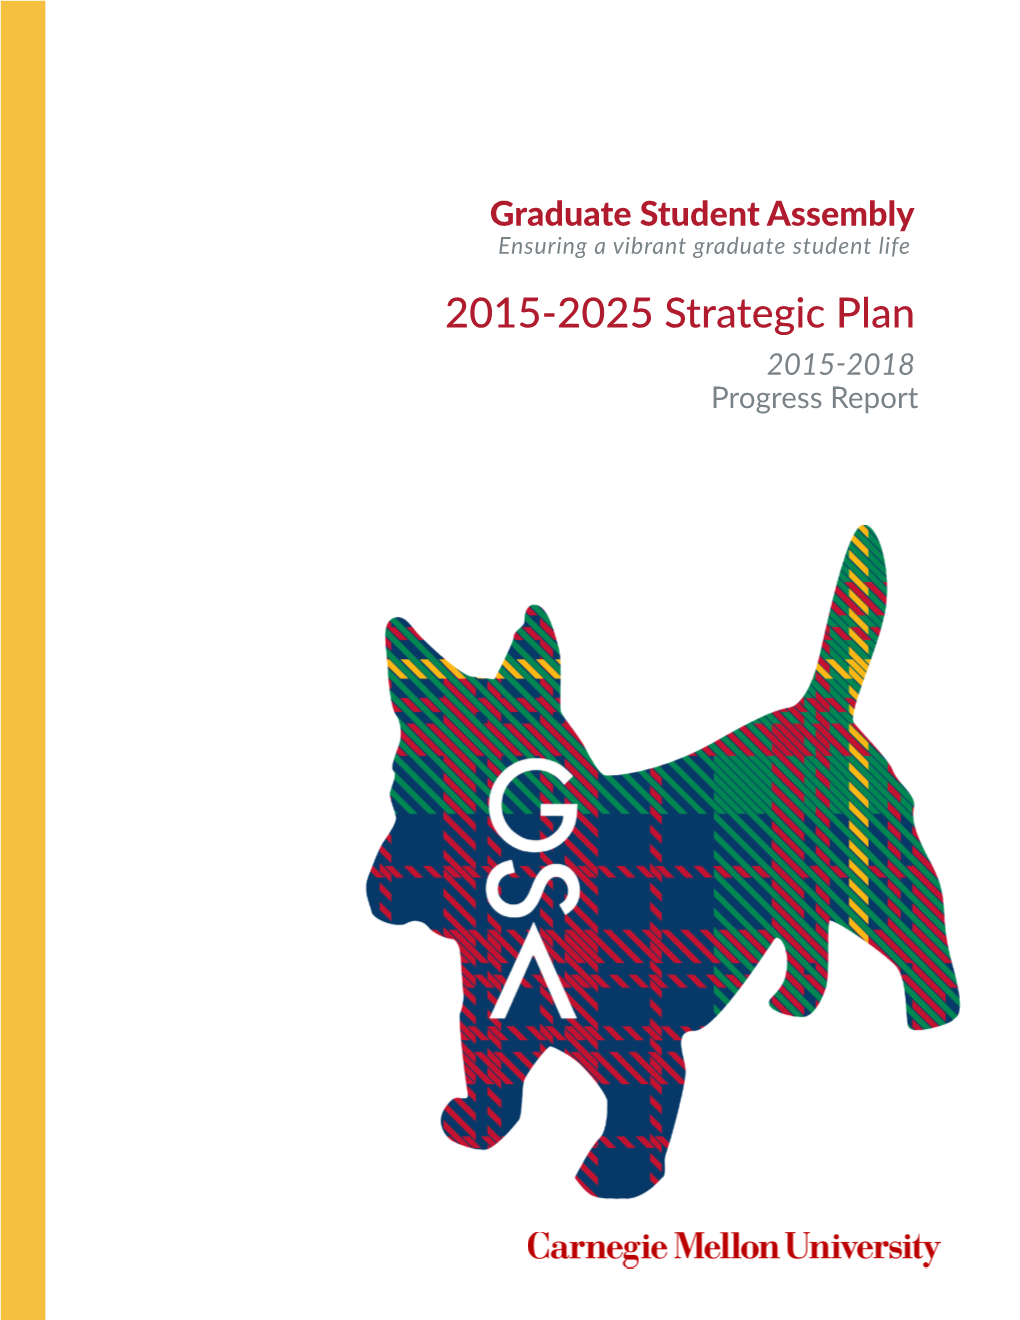 Strategic Plan 2015-2018 Progress Report Acknowledgments